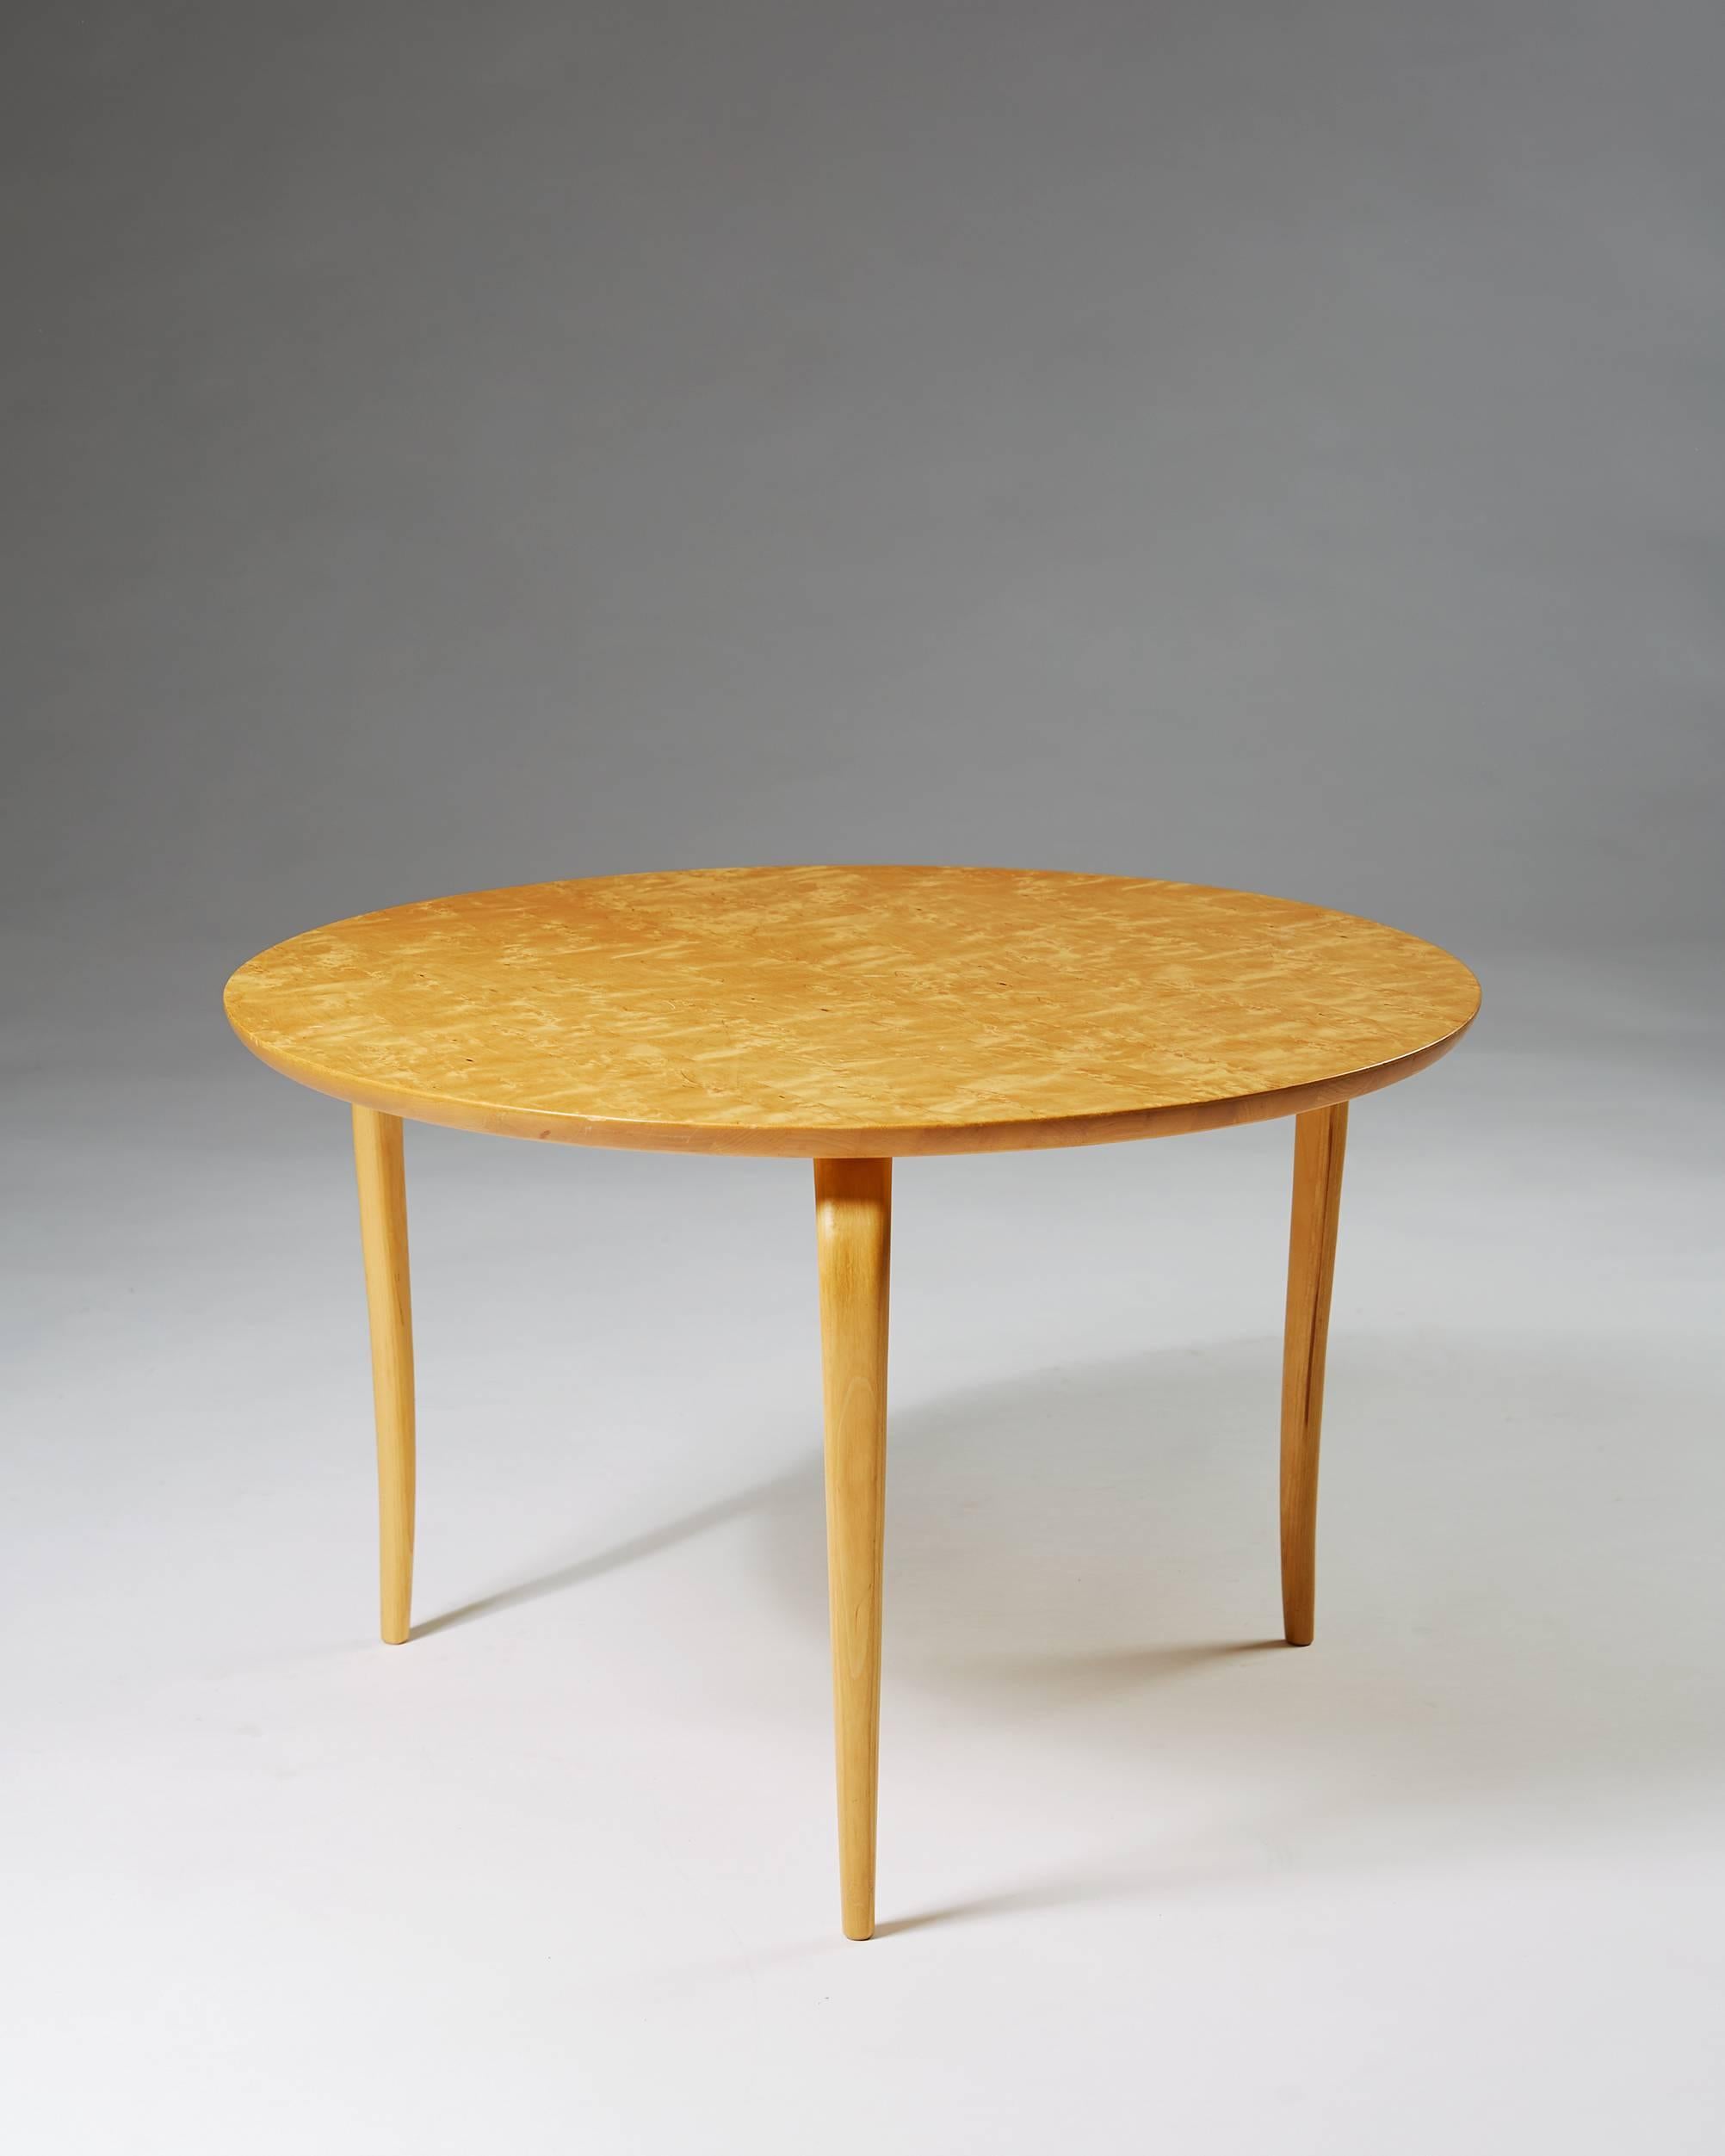 Occasional table Annika designed by Bruno Mathsson for Karl Mathsson,
Sweden. 1973.

Birch and Karelian birch.

Dimensions:
H: 42 cm / 1' 4